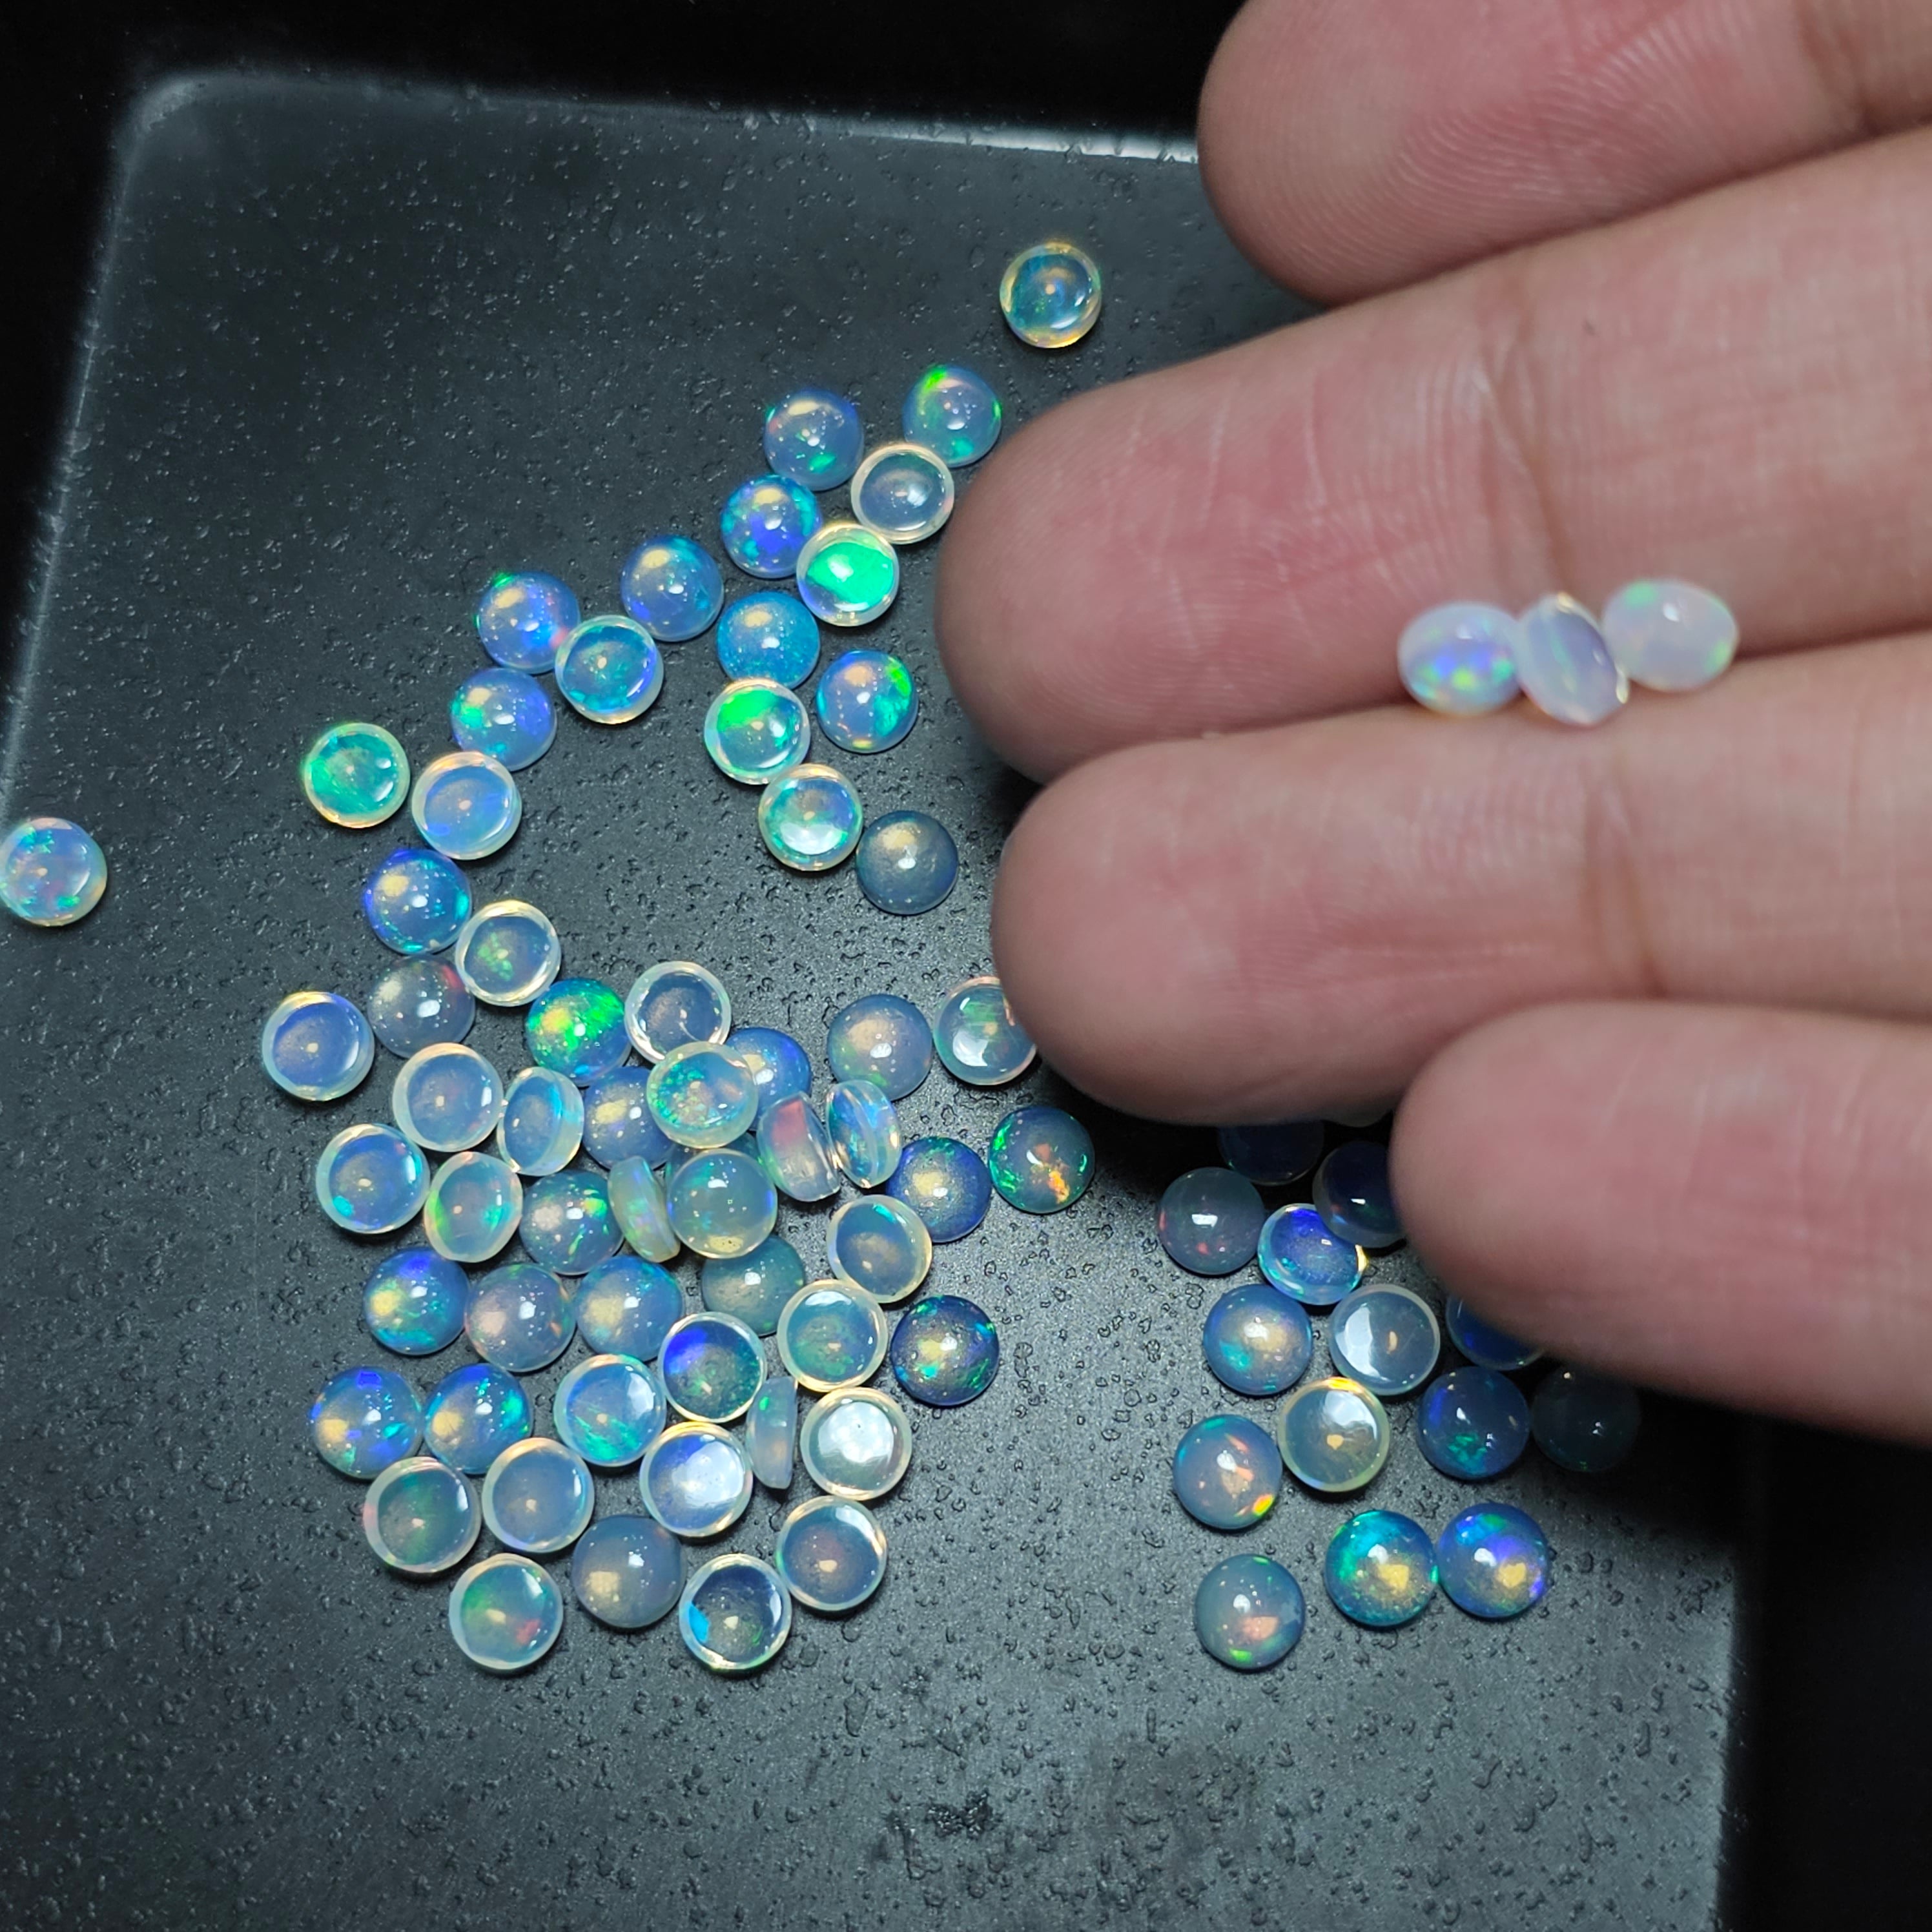 95 pcs Natural Ethiopian Opal  Opal Cabochon Gemstone Round Shape:5mm - The LabradoriteKing